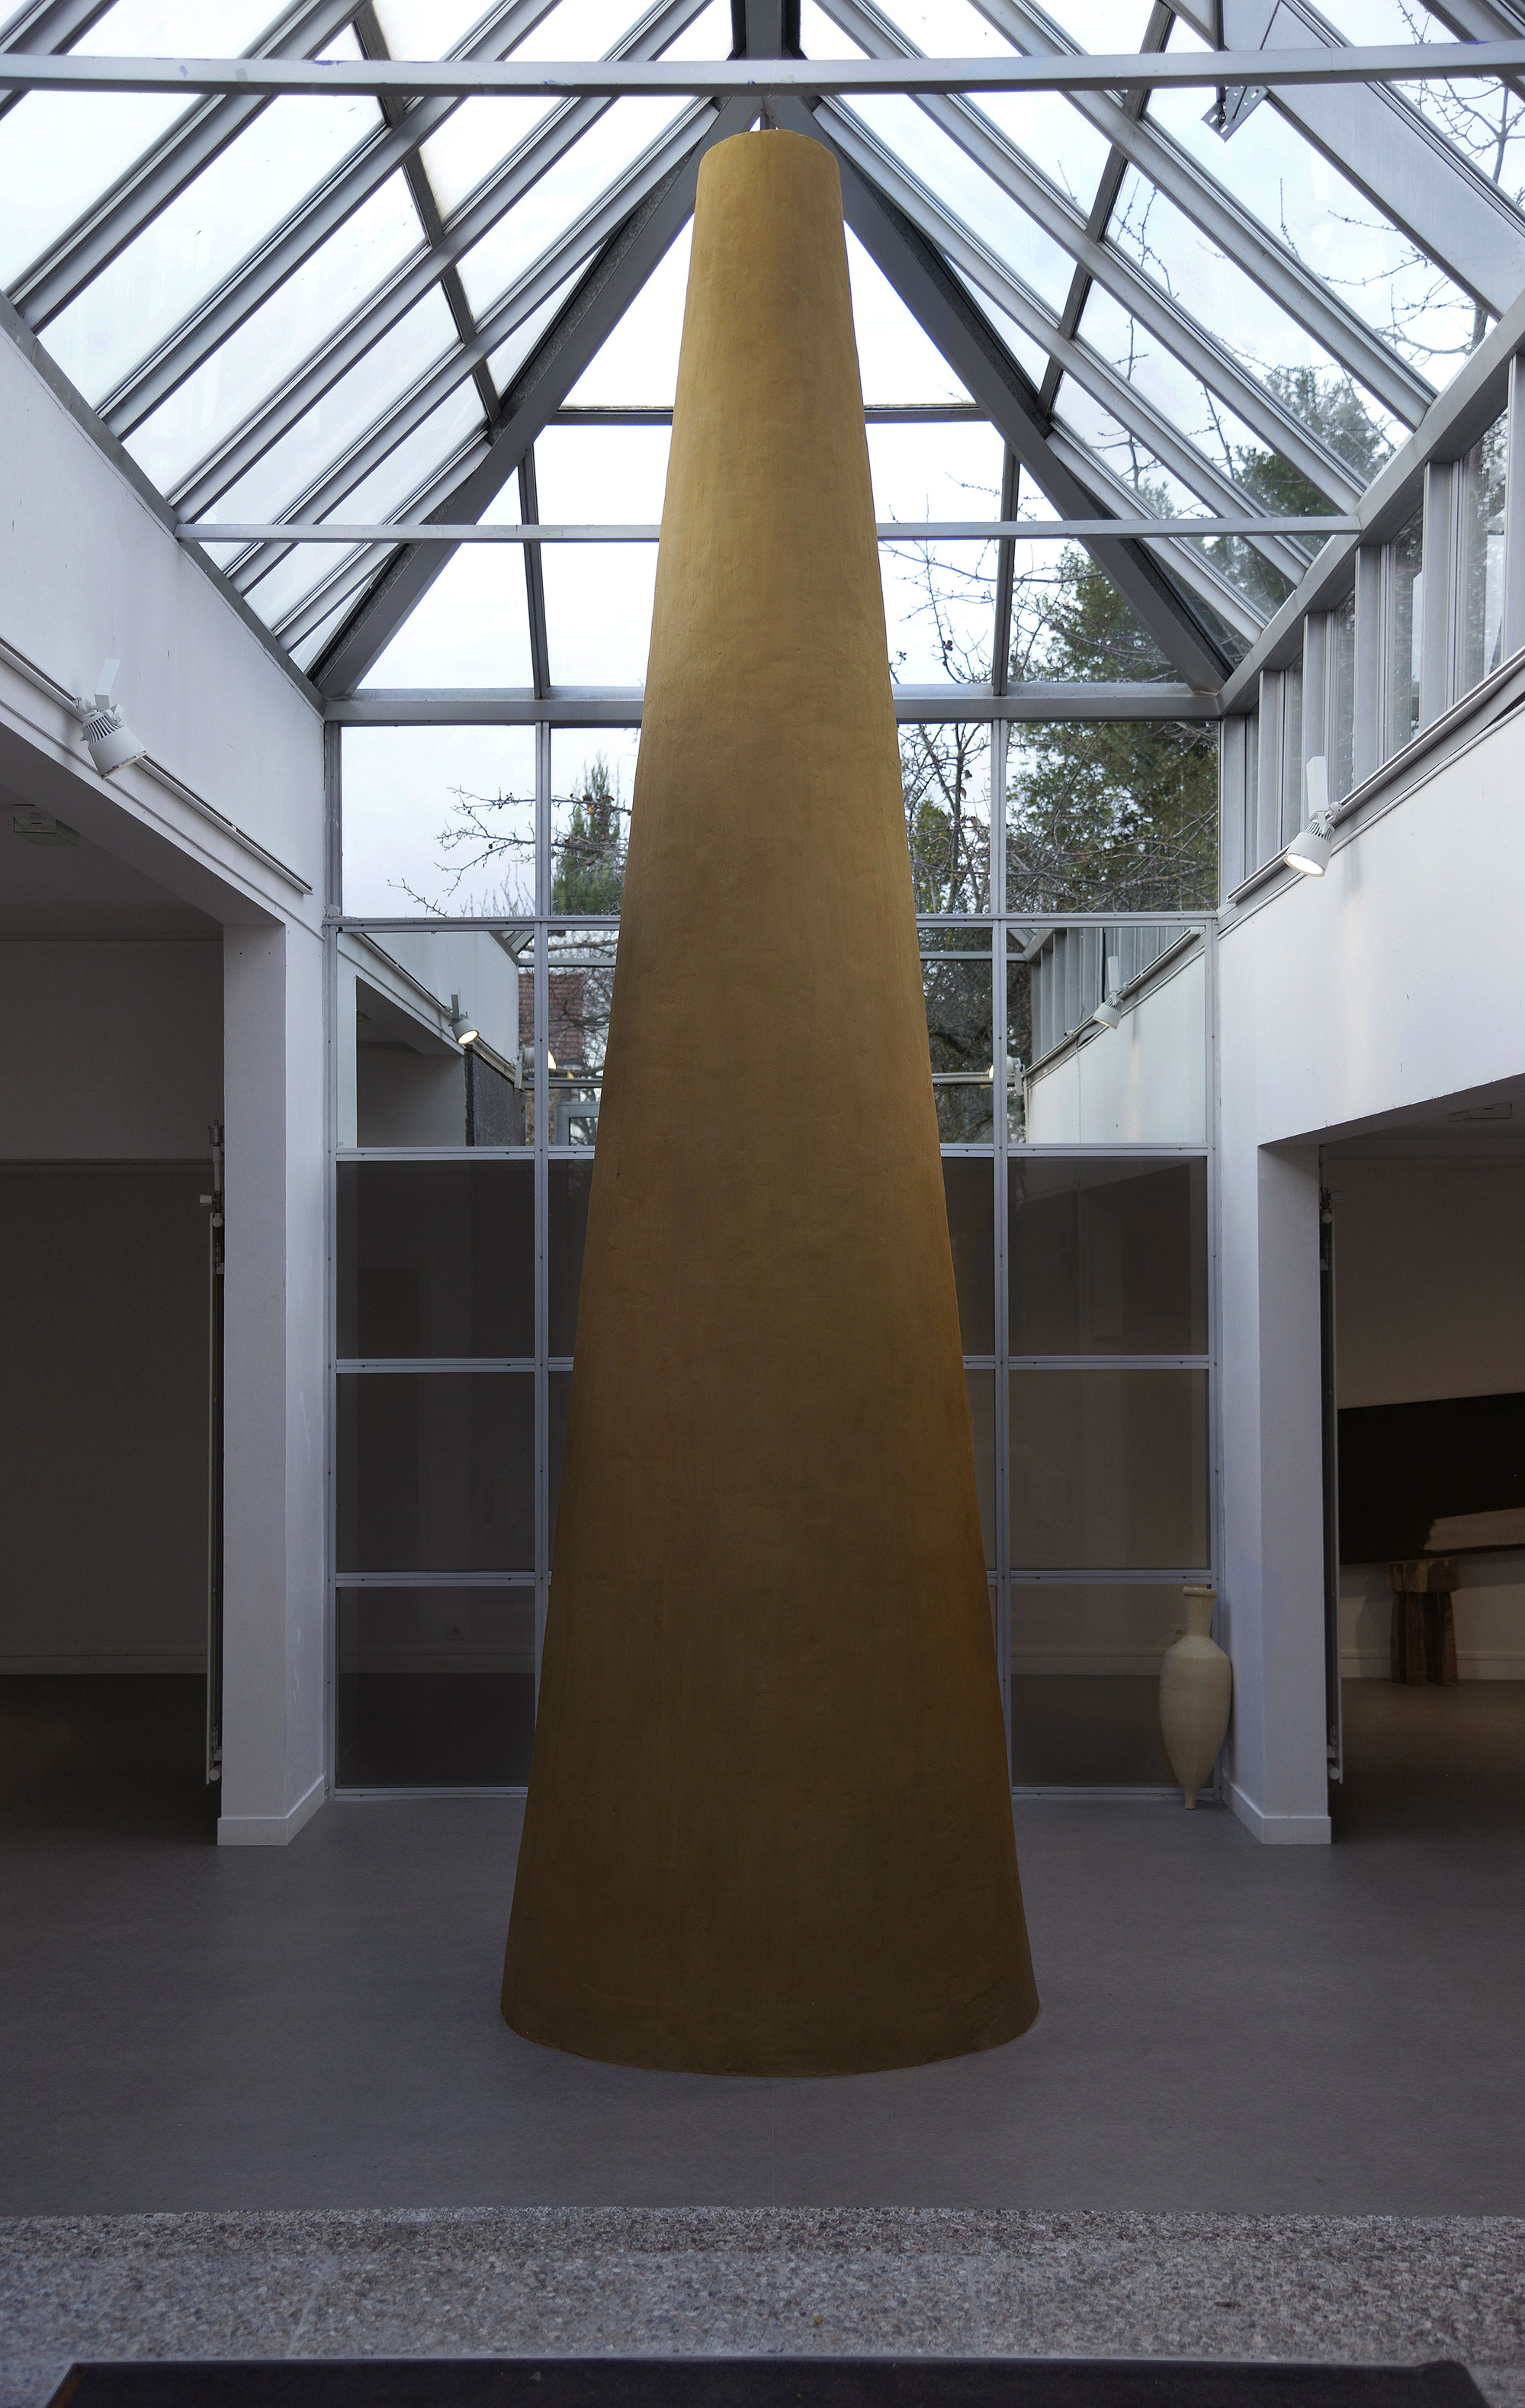  Chimney in Edgar Sarin's objectif : société, Centre d'Art Contemporain Chanot, Clamart, France. 